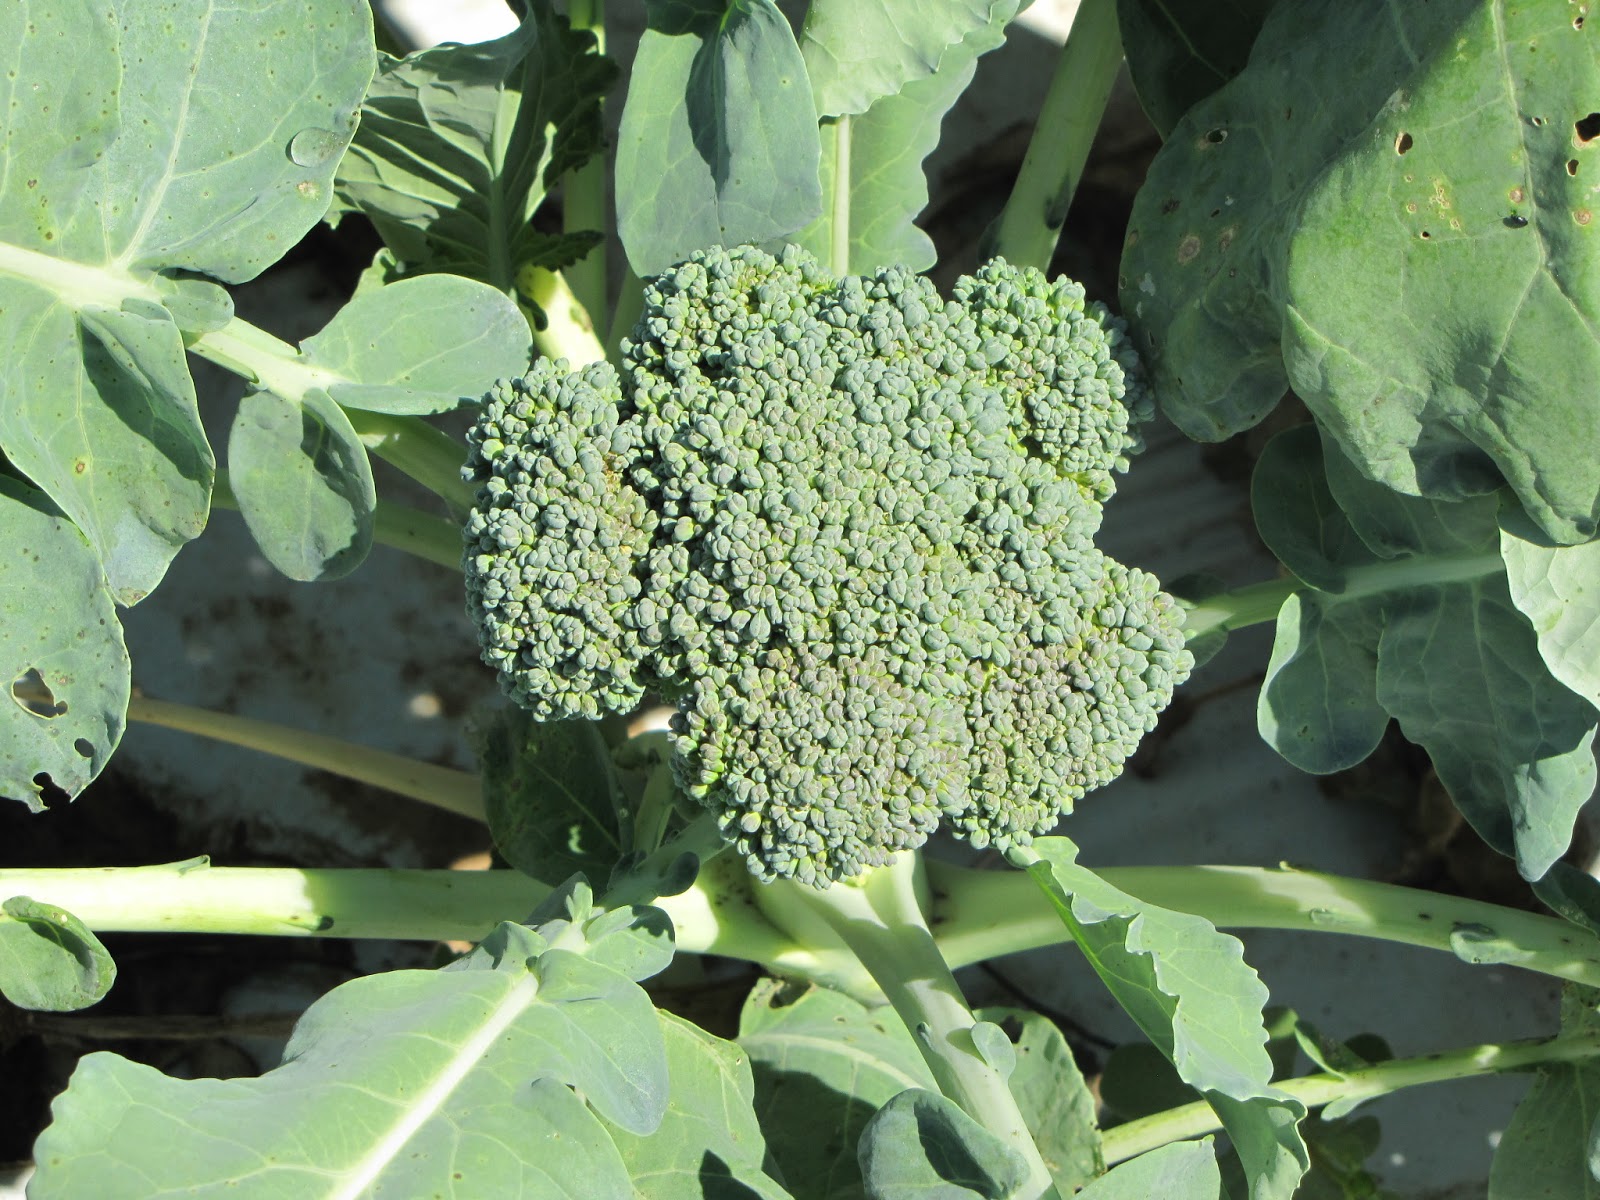 Nutri-bud broccoli grown in 2012